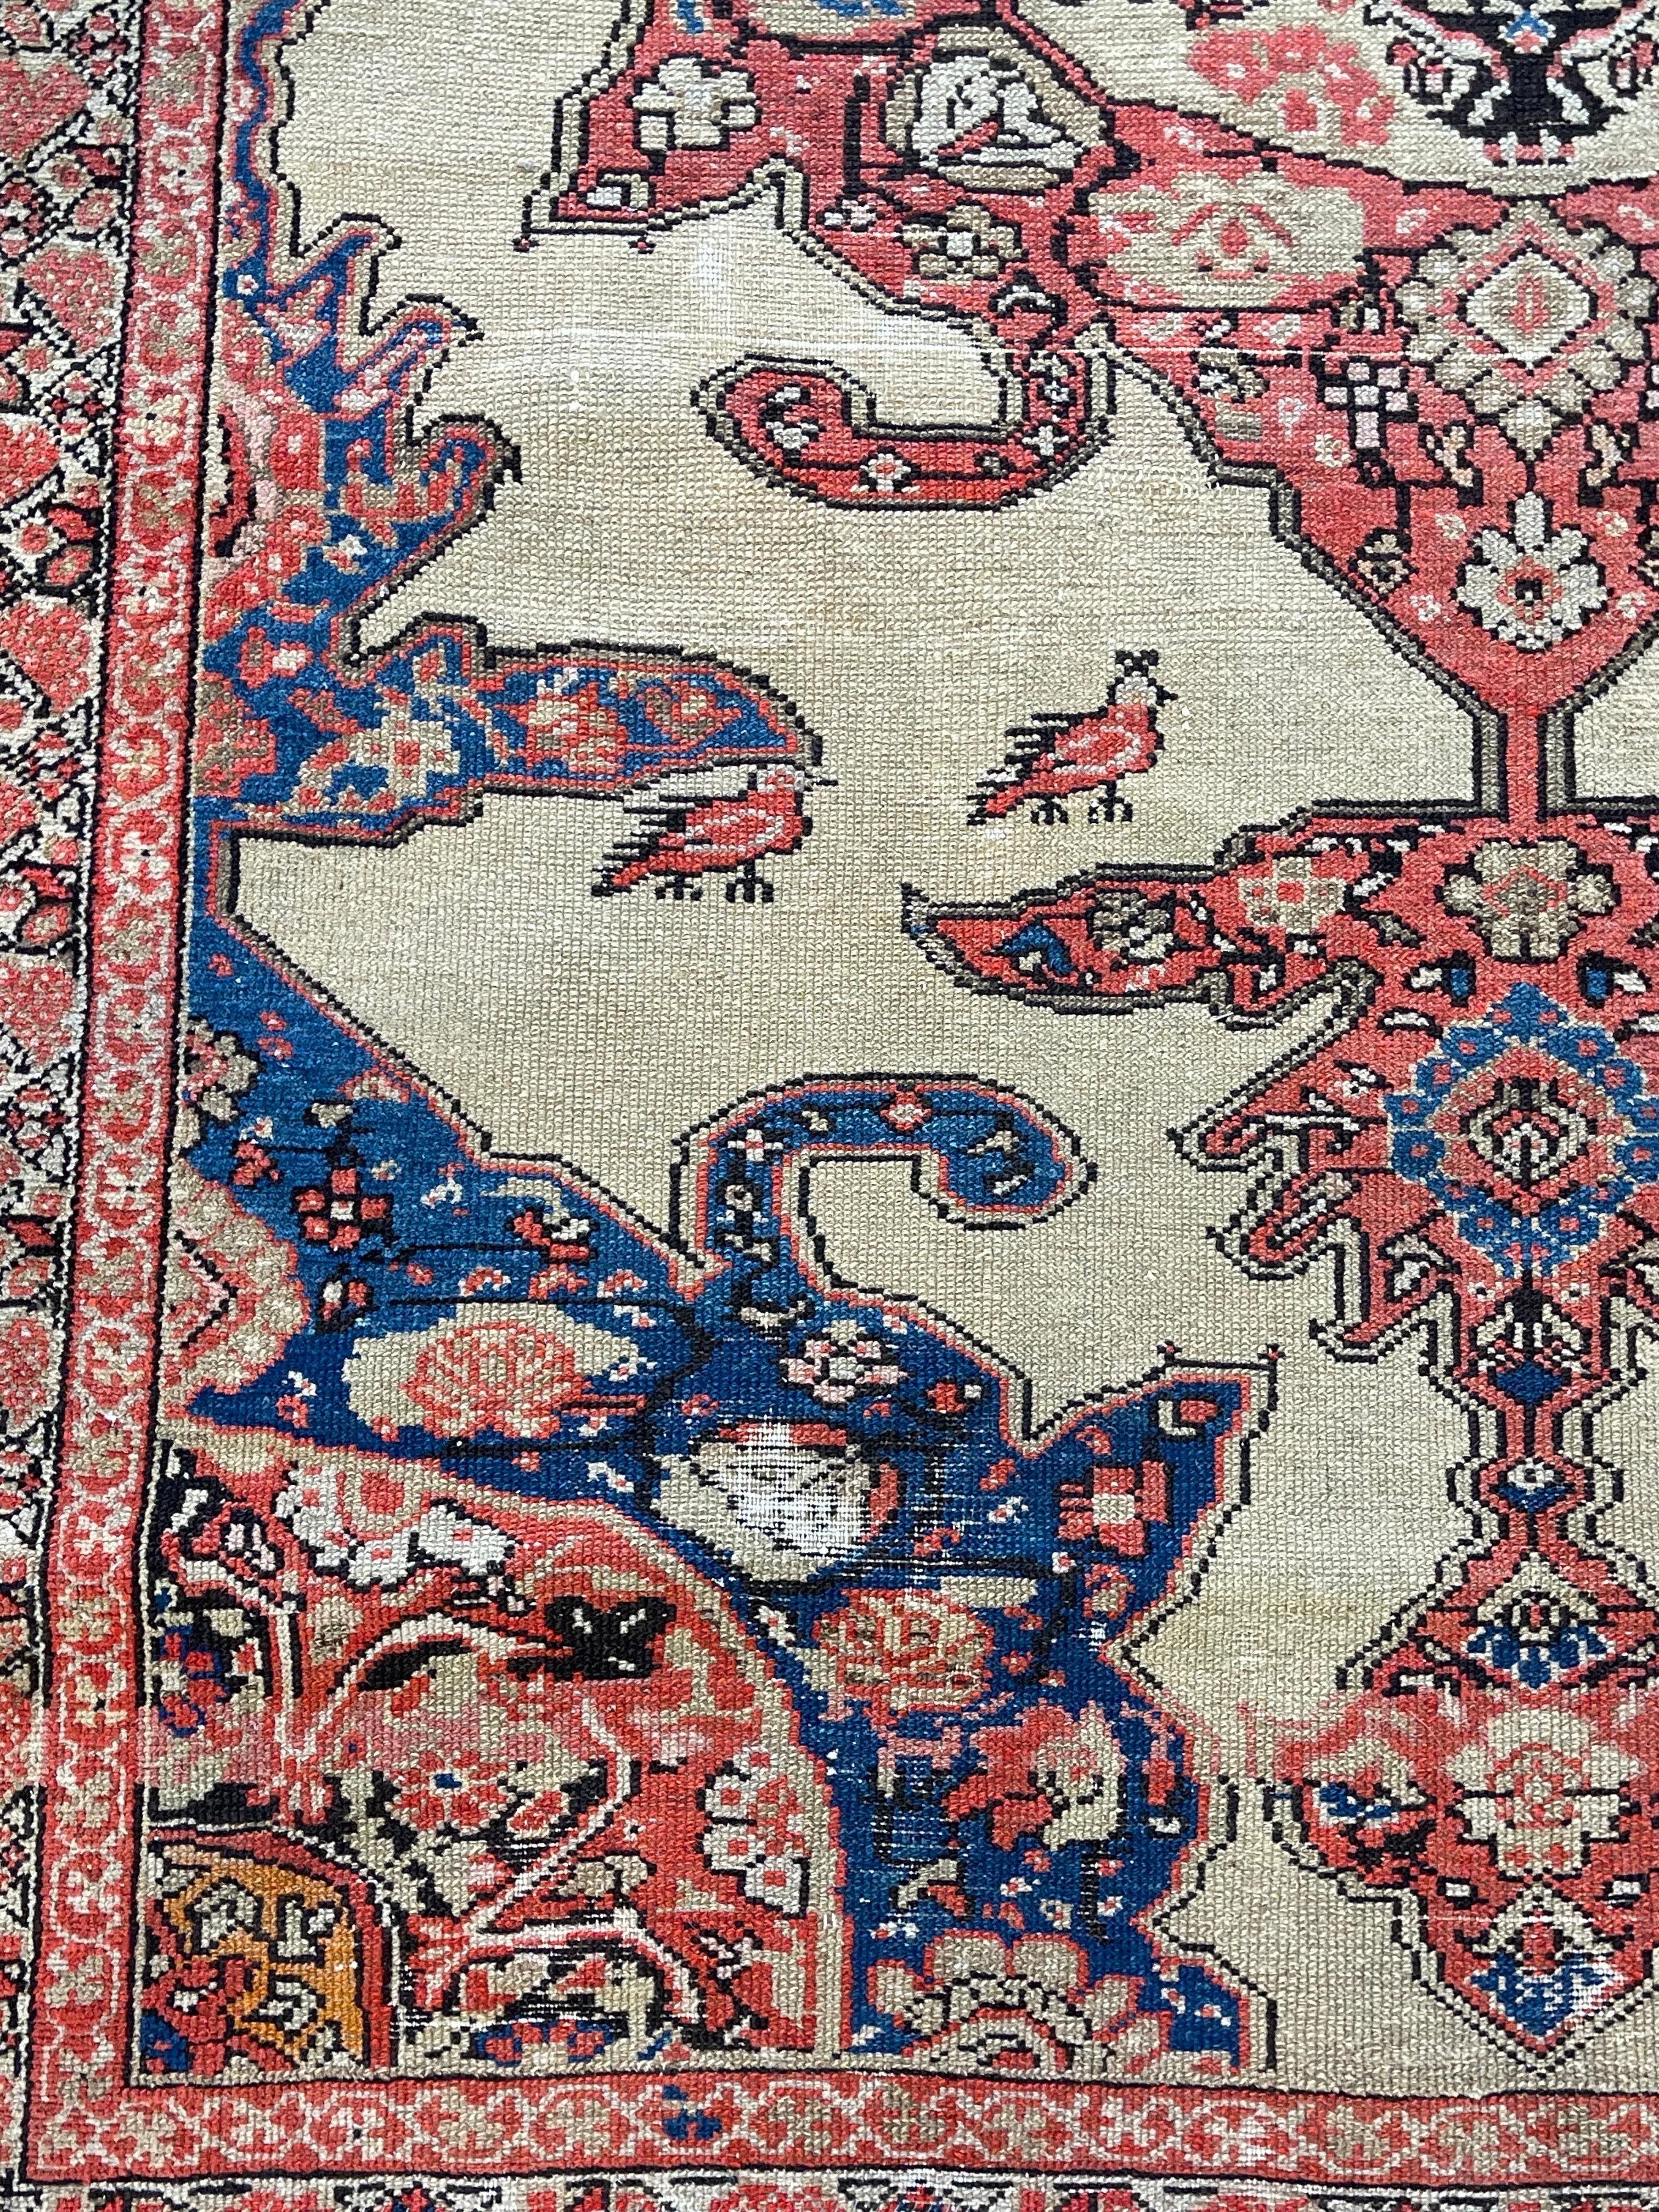 Early 20th Century Antique Persian Malayer Vagireh Sampler Rug, circa 1920 For Sale